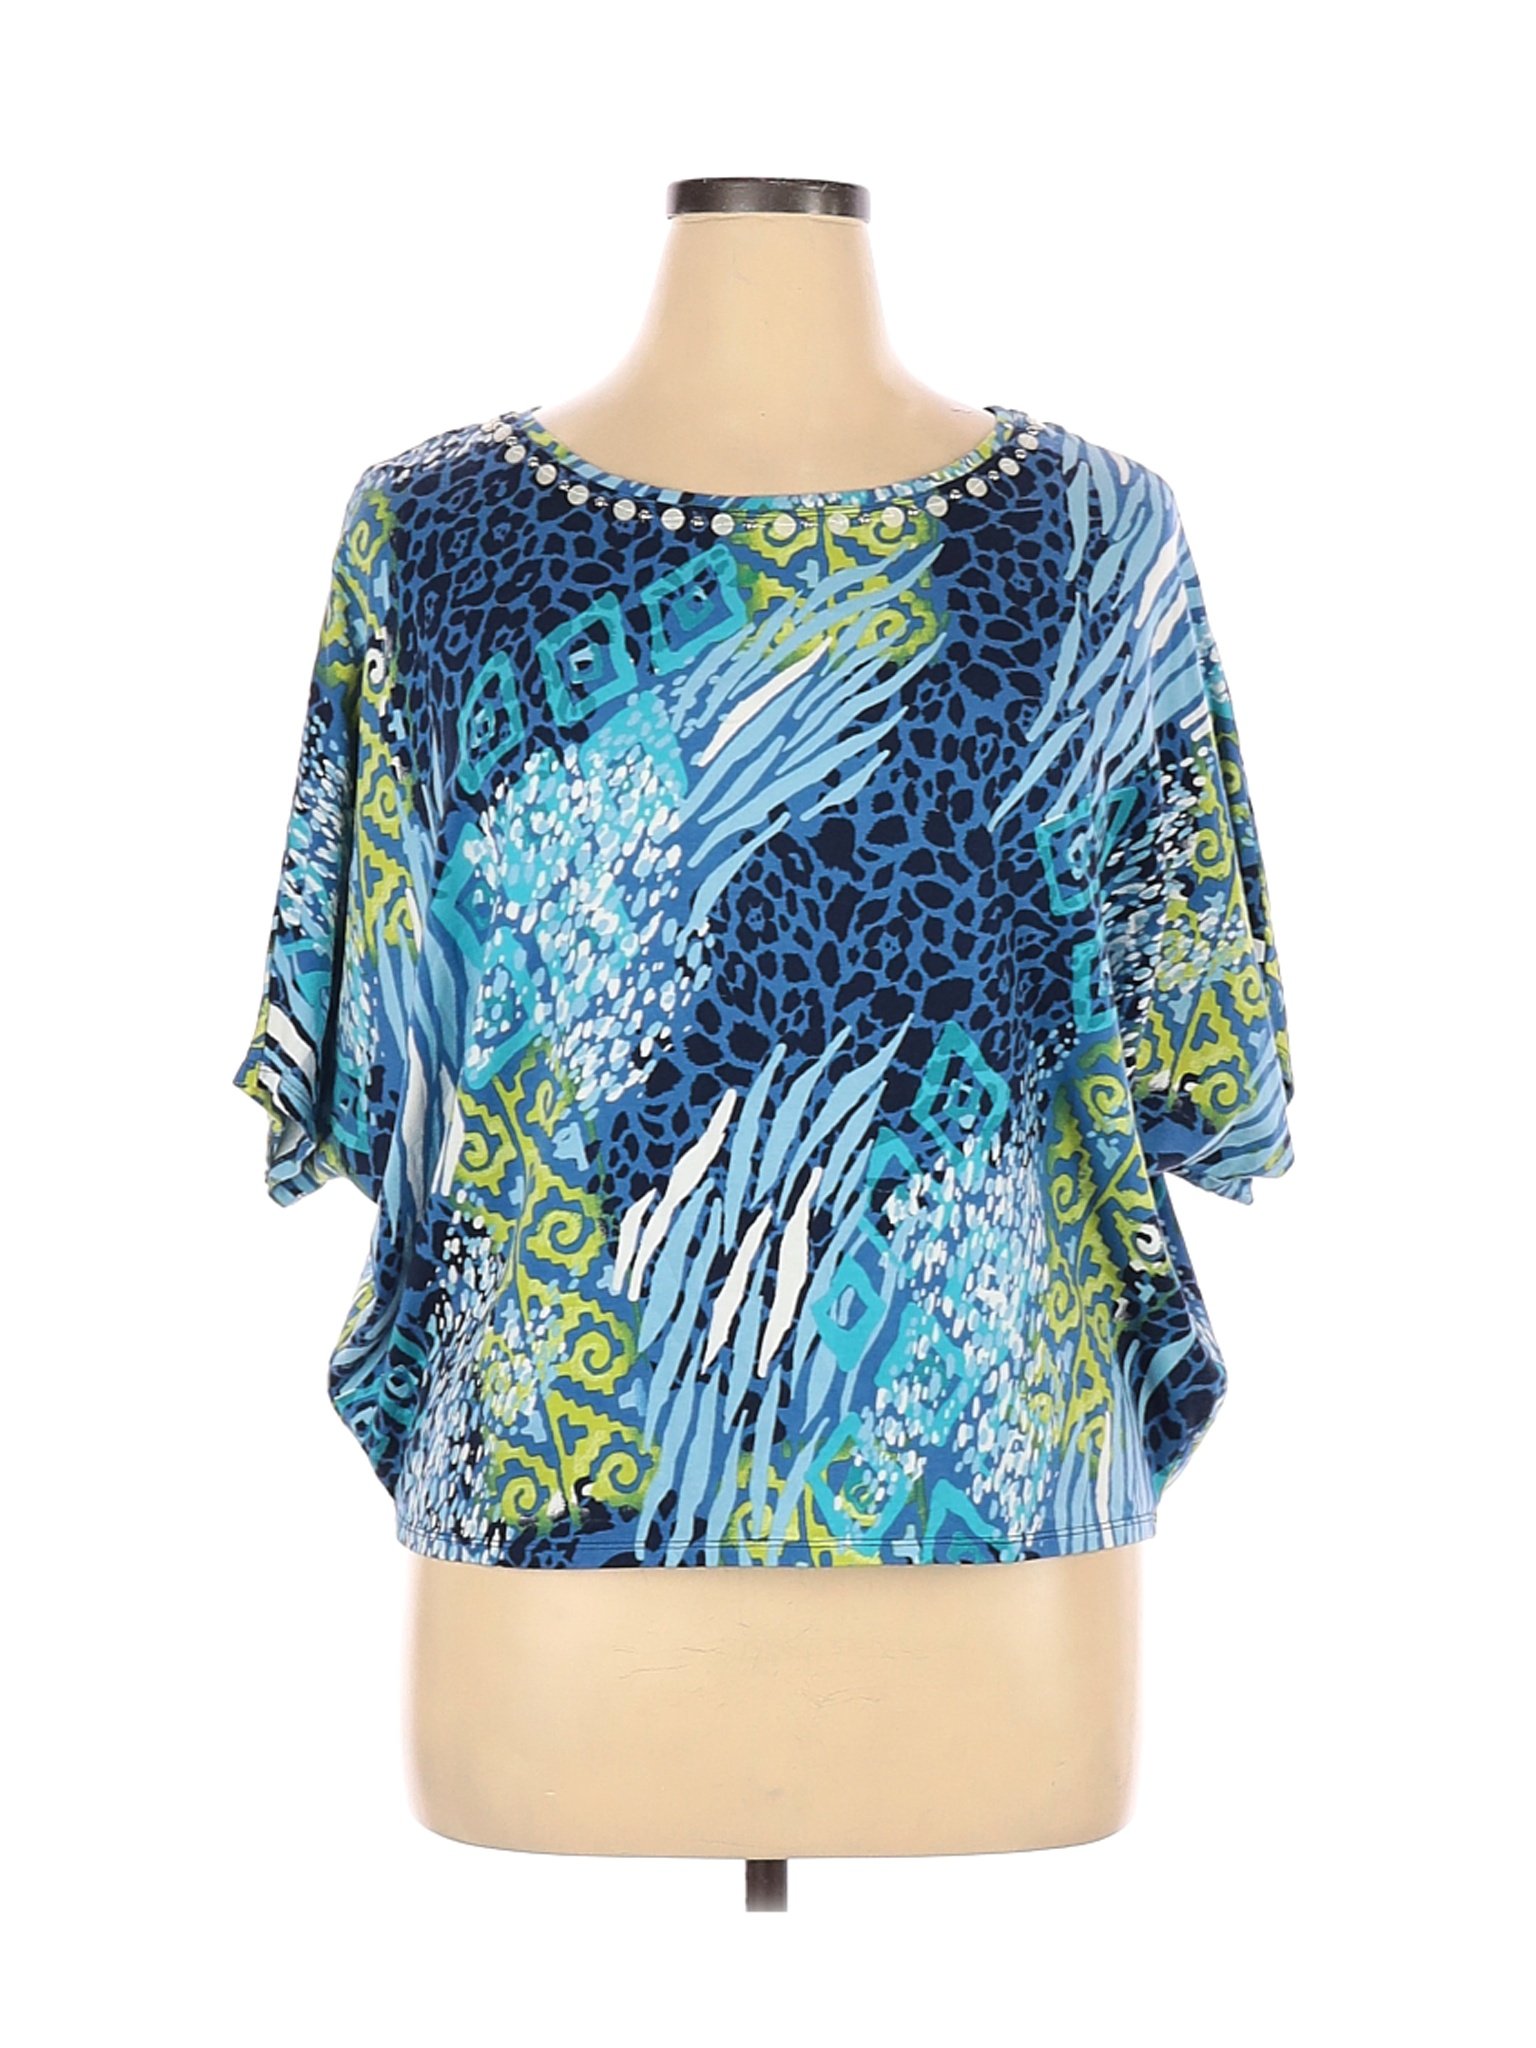 Hearts of Palm Woman Women Blue Short Sleeve Top XL Petites | eBay